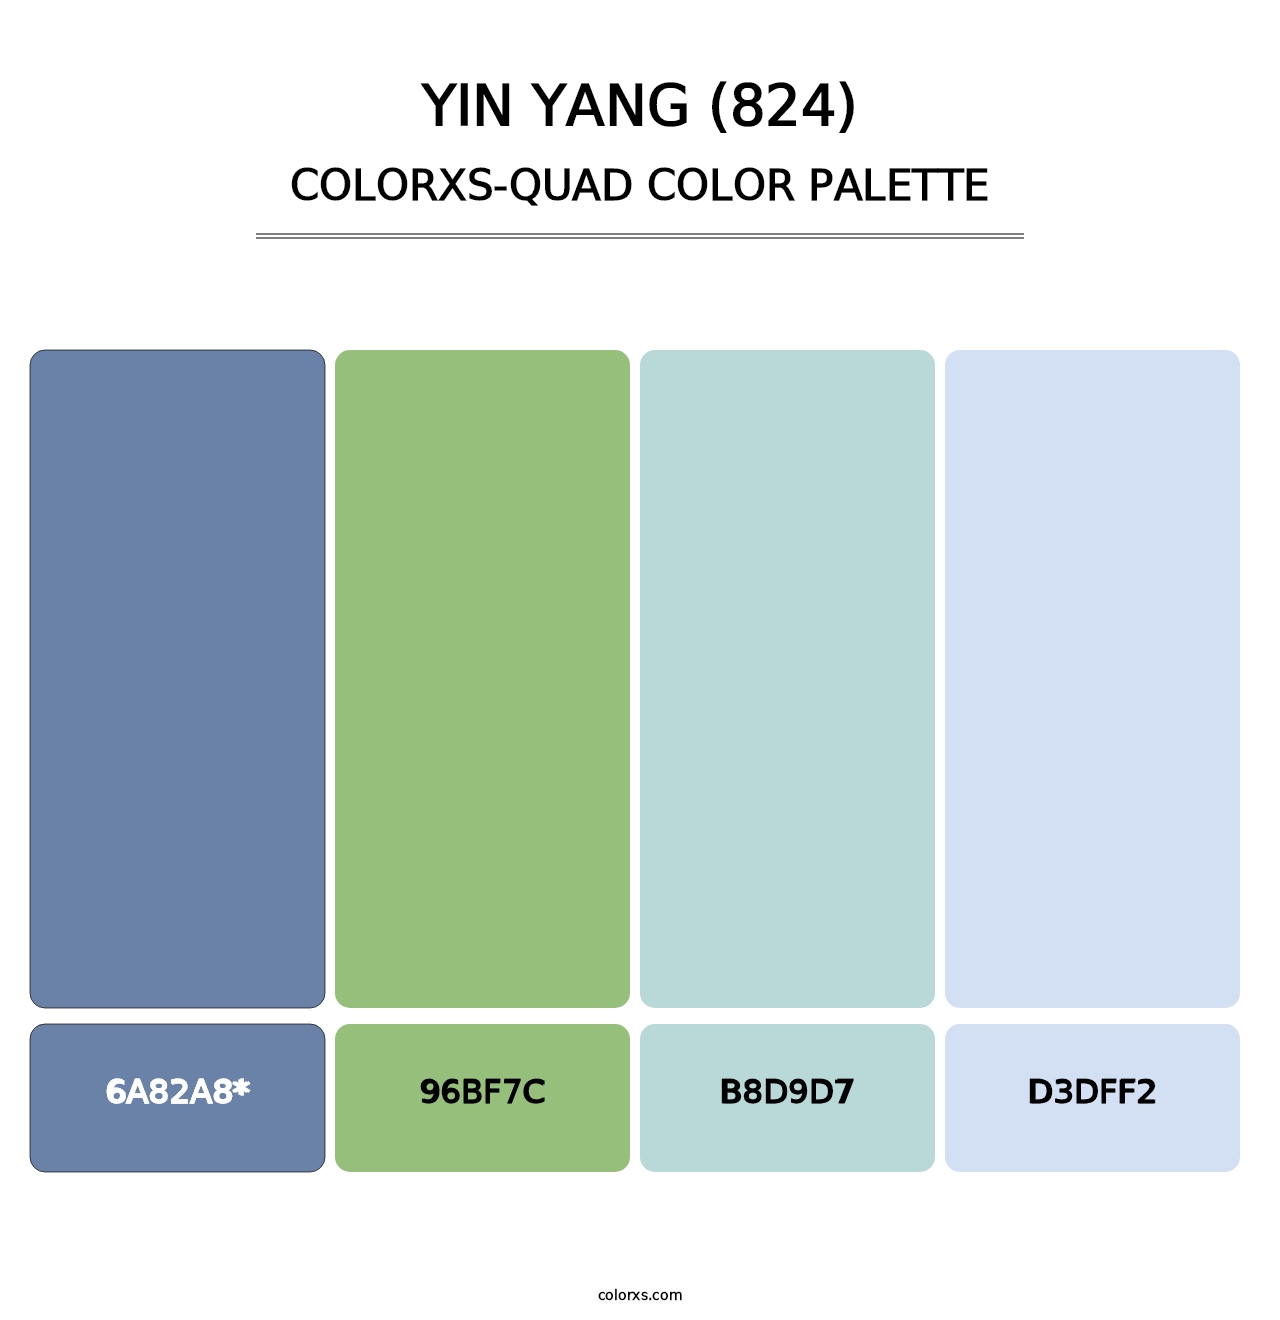 Yin Yang (824) - Colorxs Quad Palette